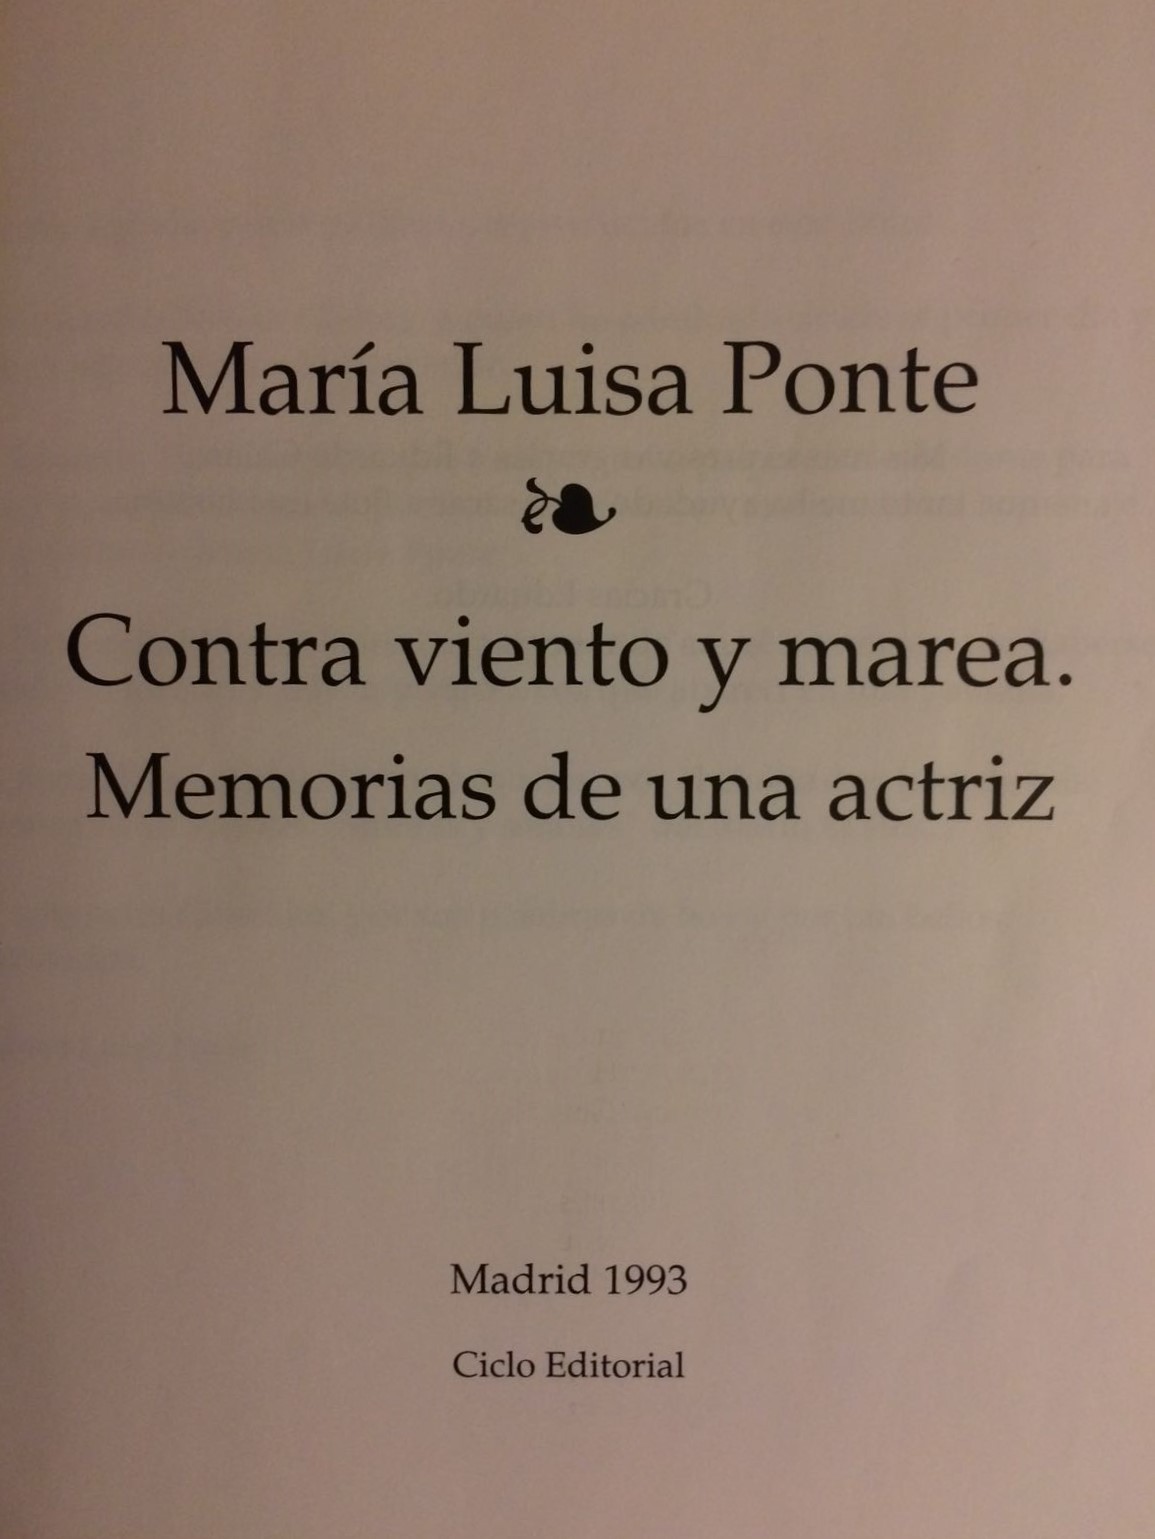 Maria
              Luisa Ponte memorias